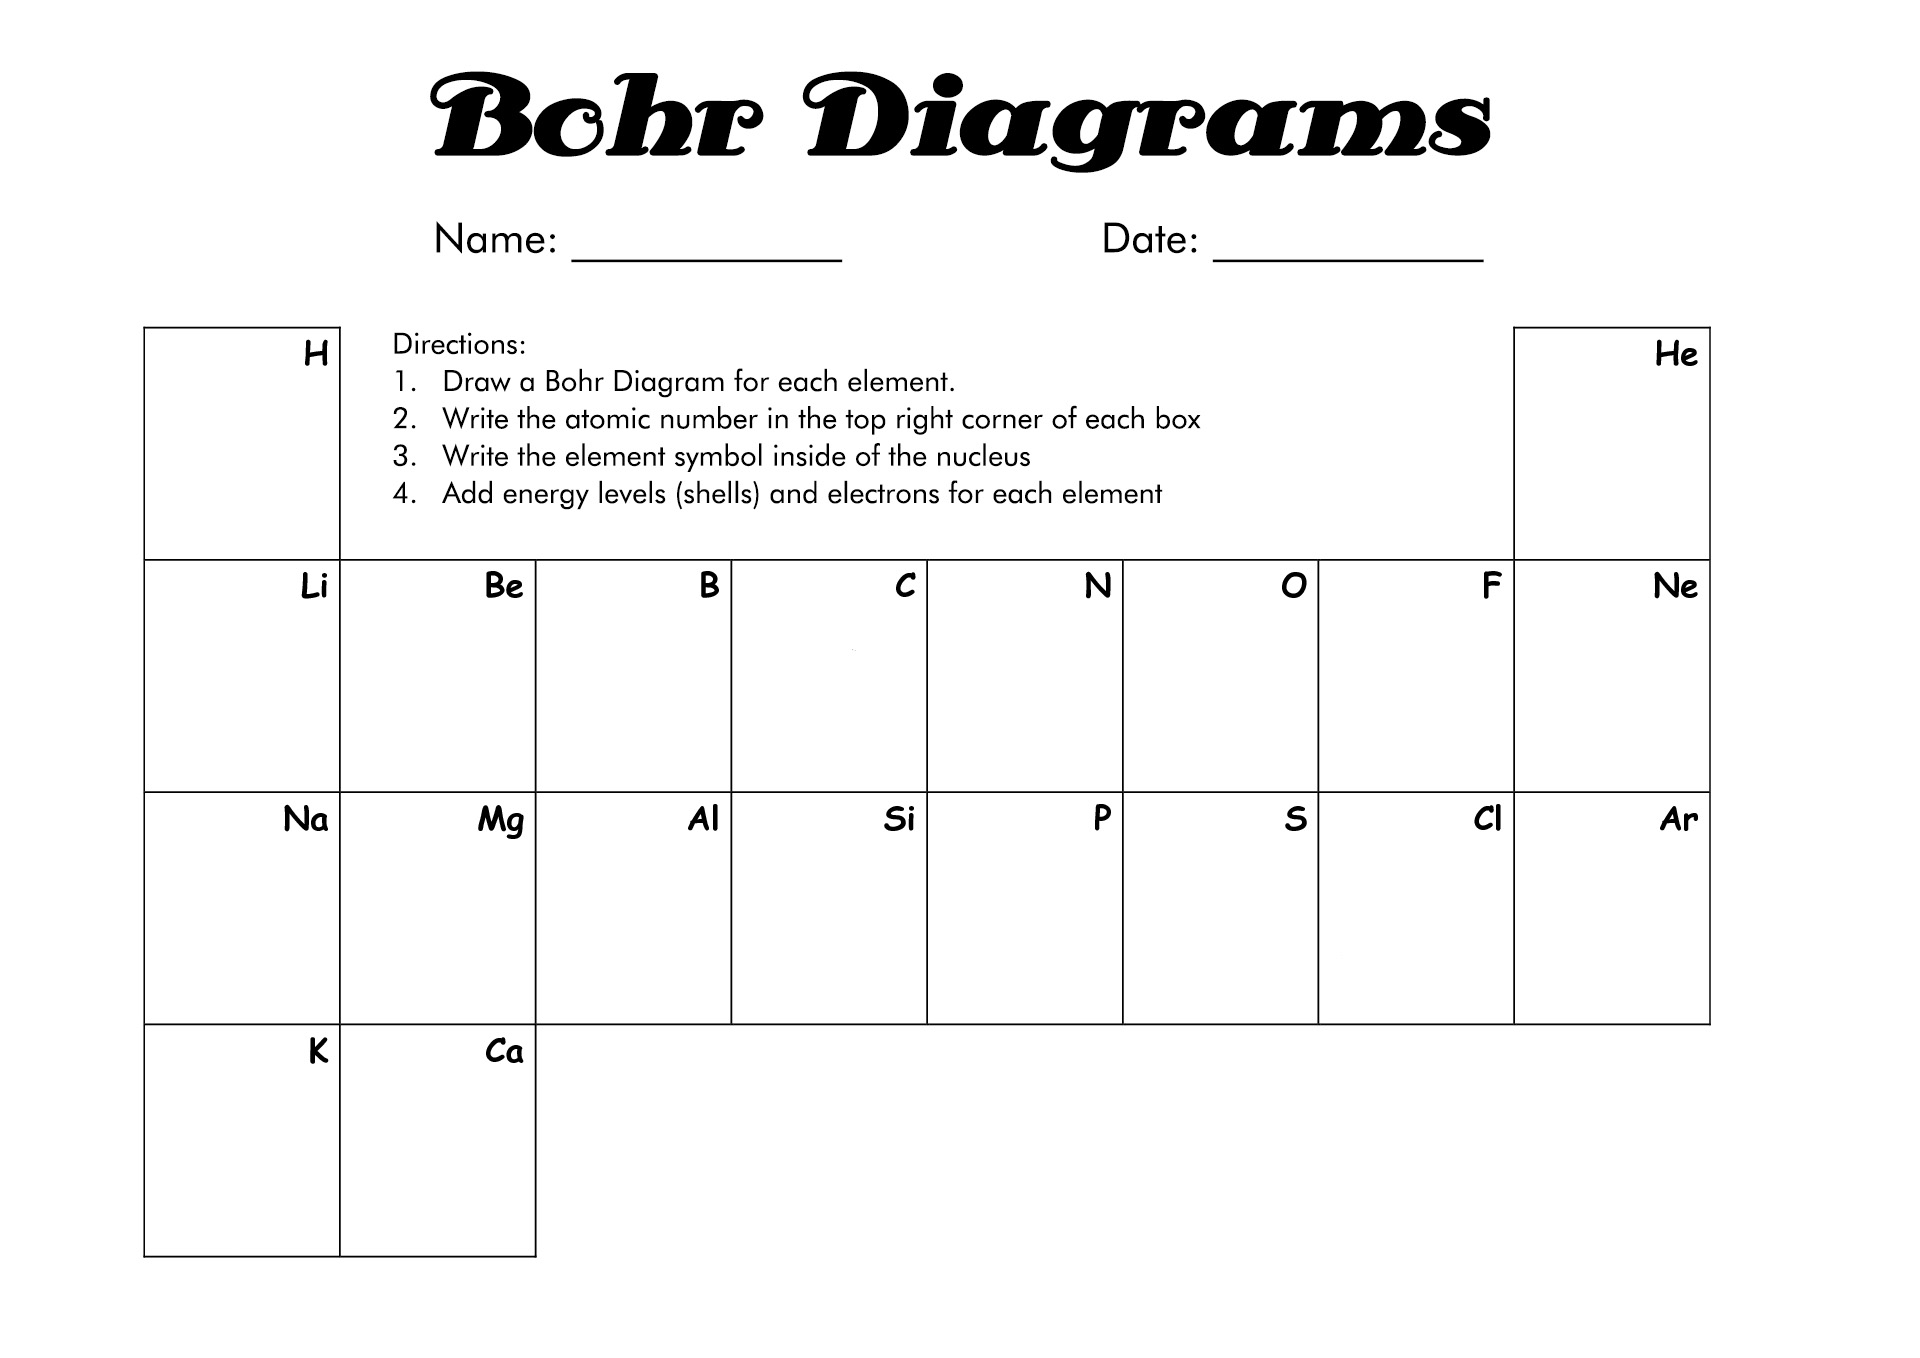 bohr-model-diagrams-worksheet-answers